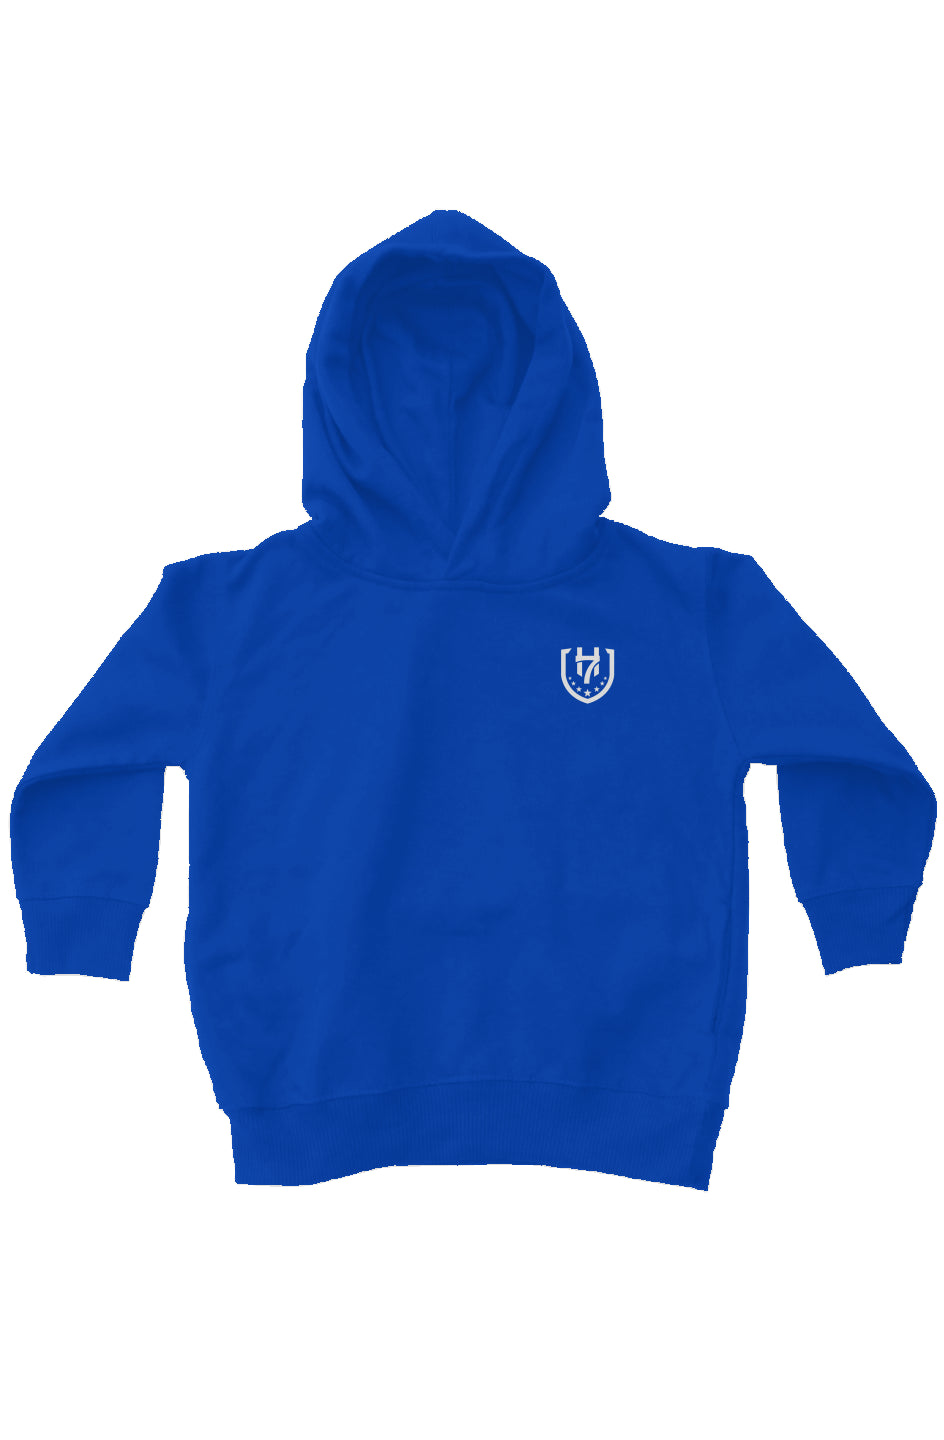 H7 Royal Blue/White kids fleece pullover hoodie